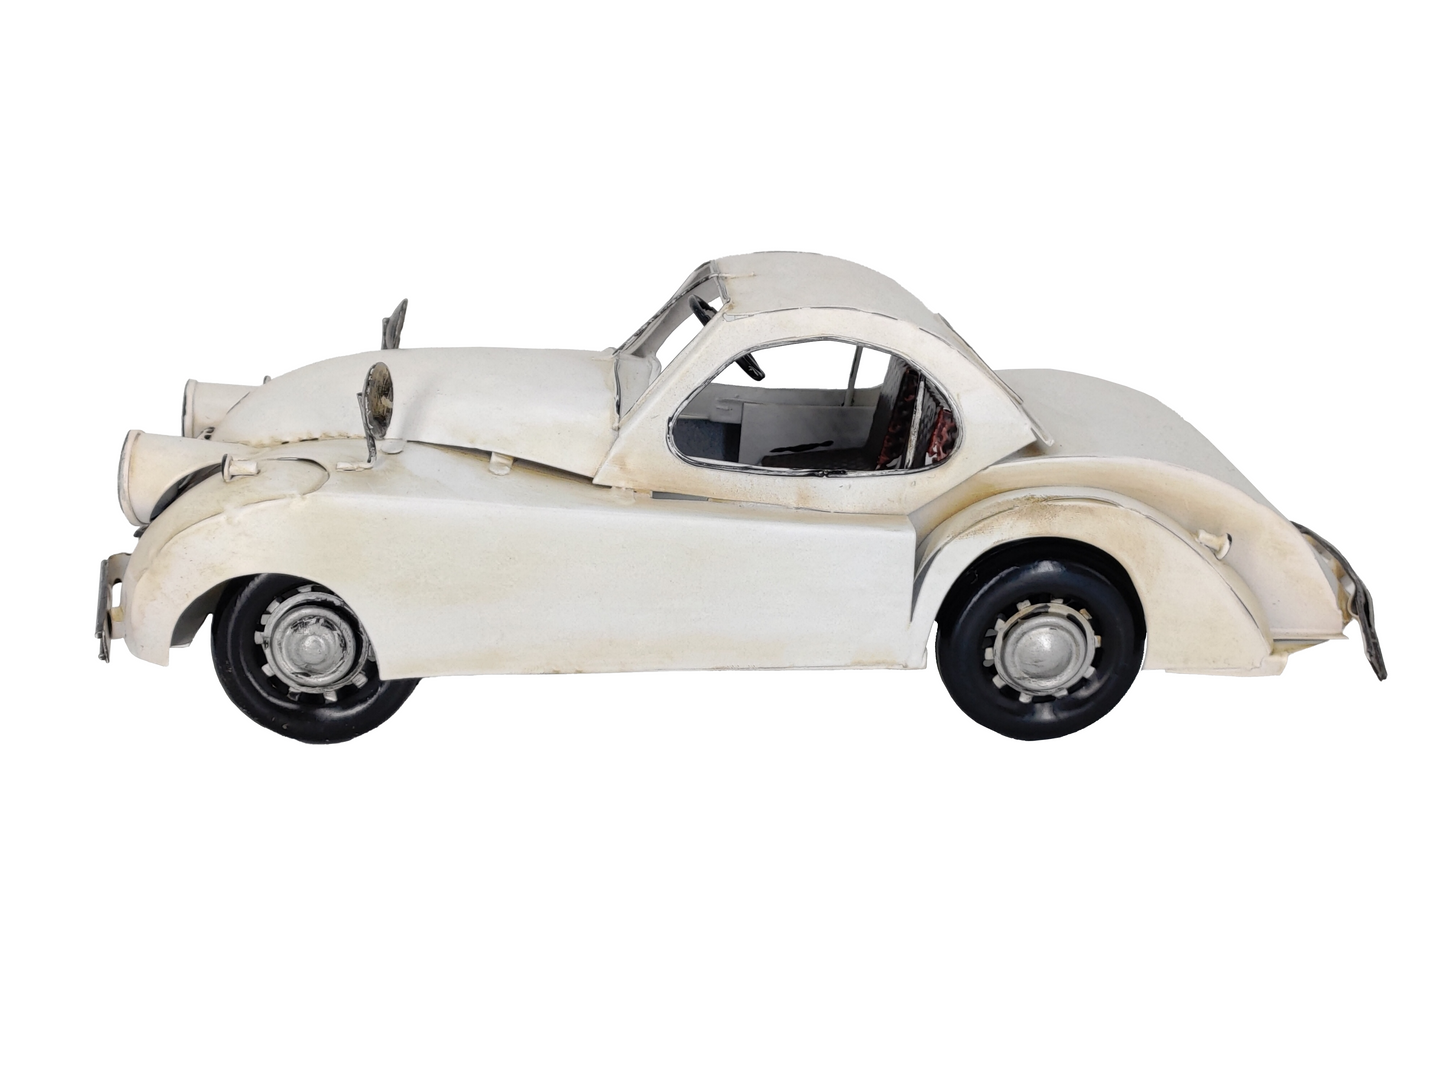 WHITE JAGUAR XK140 VINTAGE MODEL CAR DIECAST MODEL